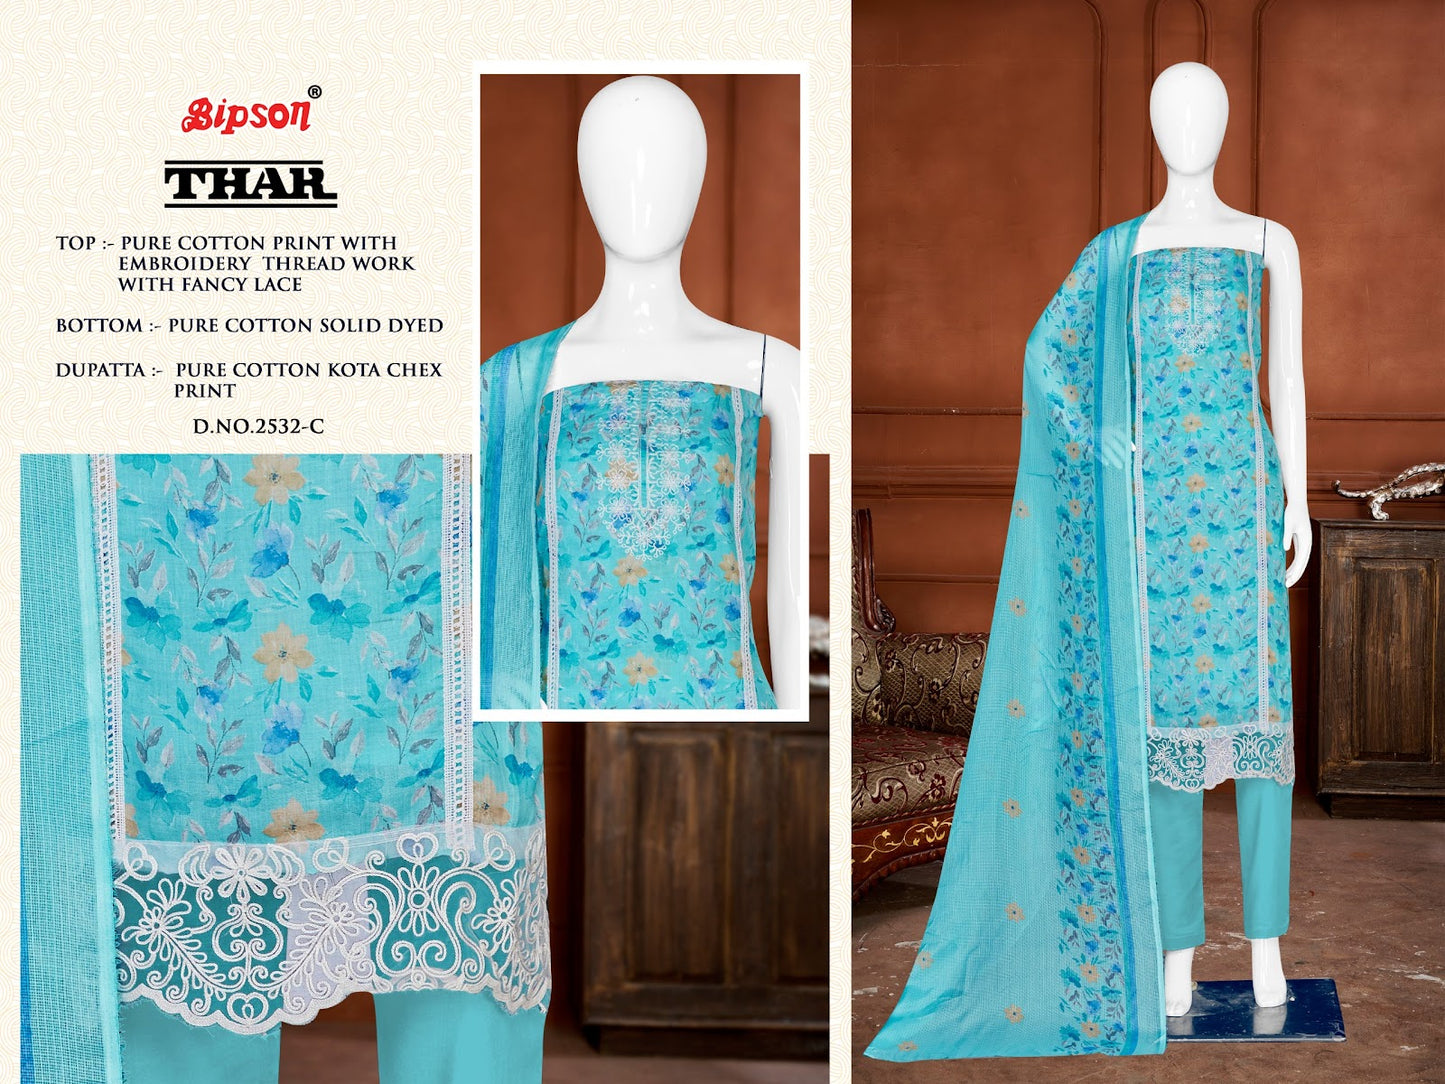 Thar 2532 Bipson Prints Pure Cotton Pant Style Suits Wholesaler India